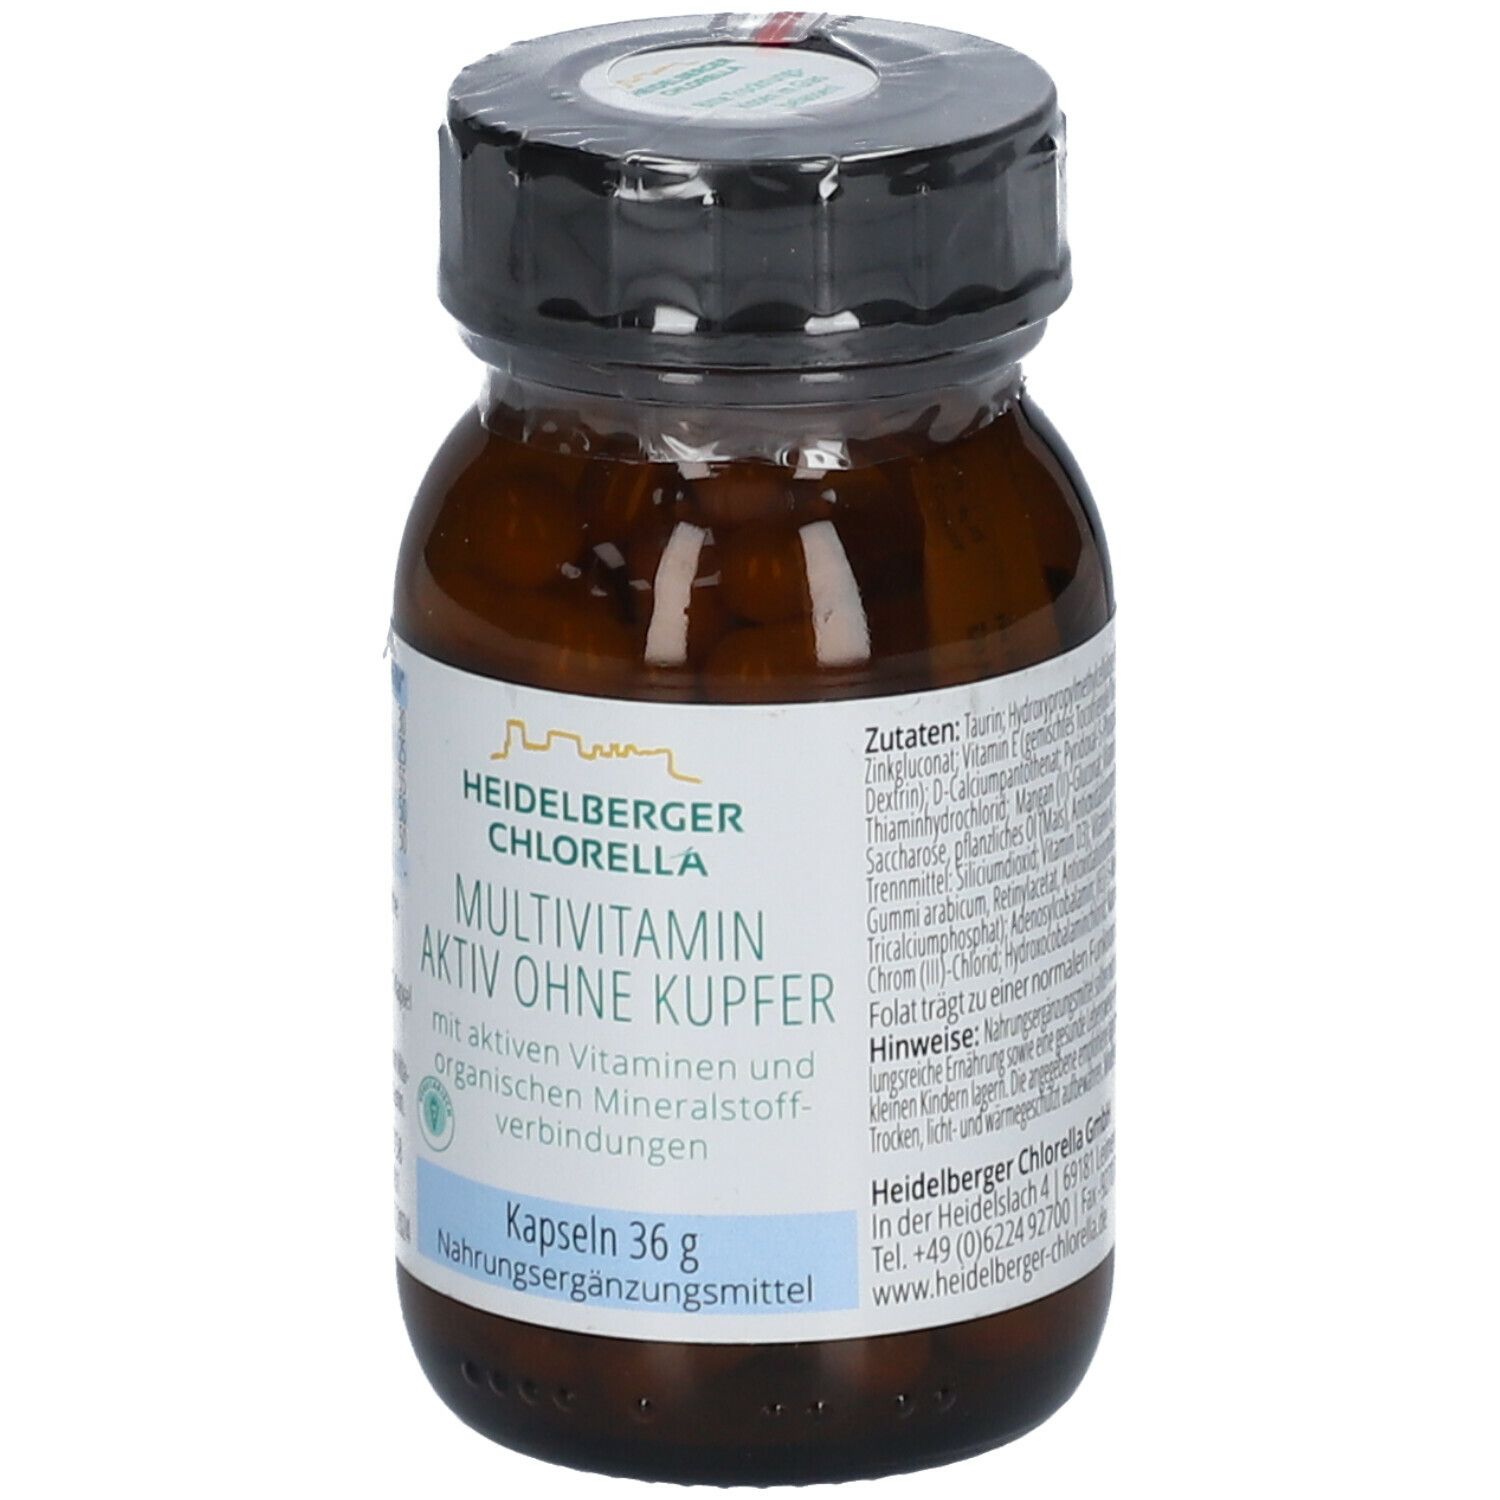 Heidelberger Chlorella® Multivitamin Aktiv ohne Kupfer